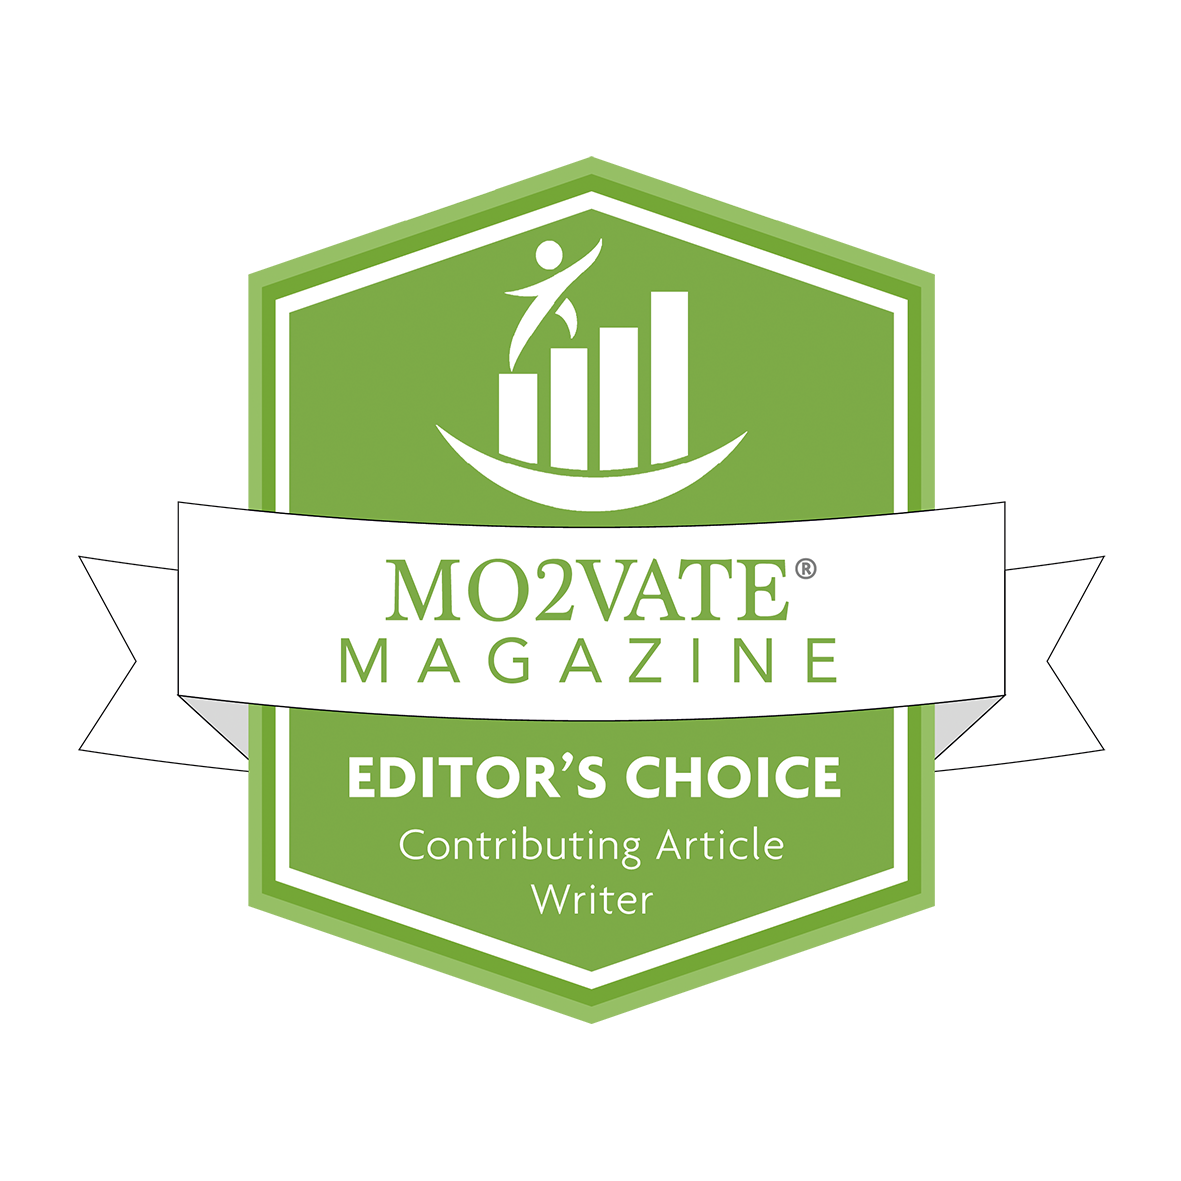 MO2VATE Magazine Editor's Choice Author